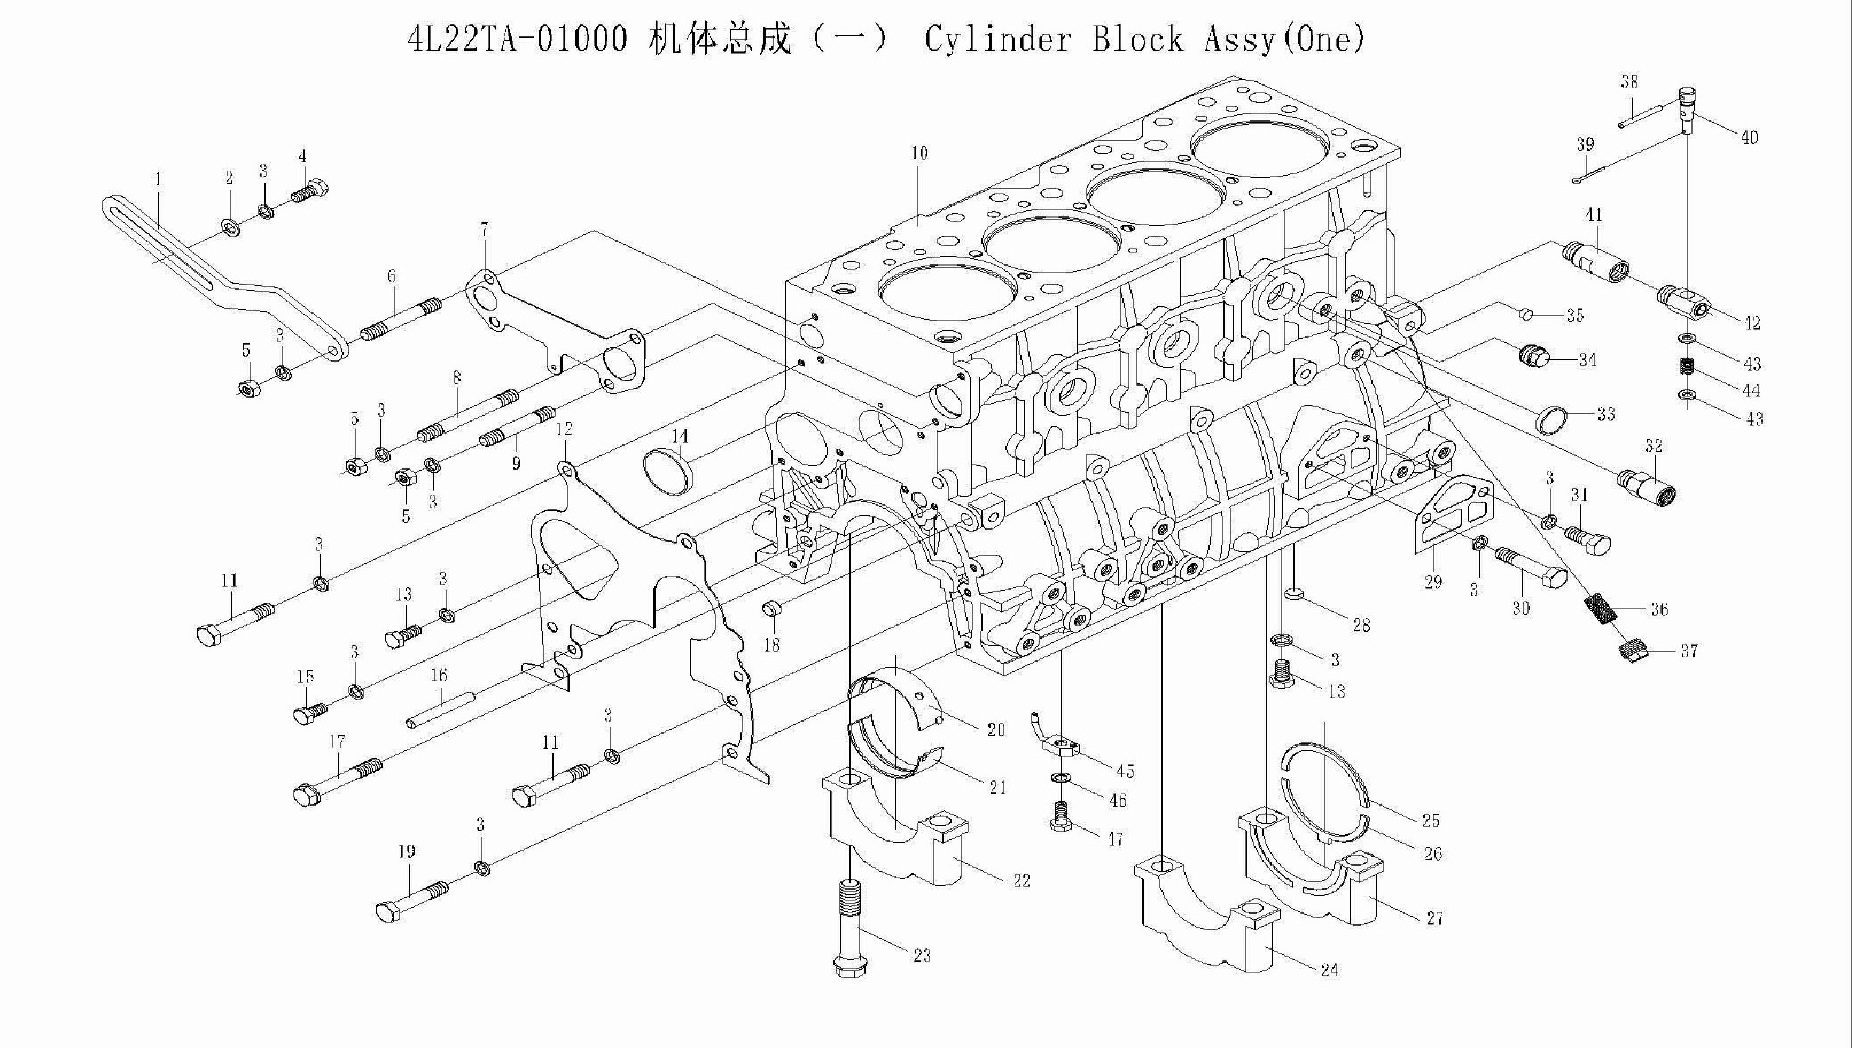 Cylinder Block (One) - 4L22 Engine